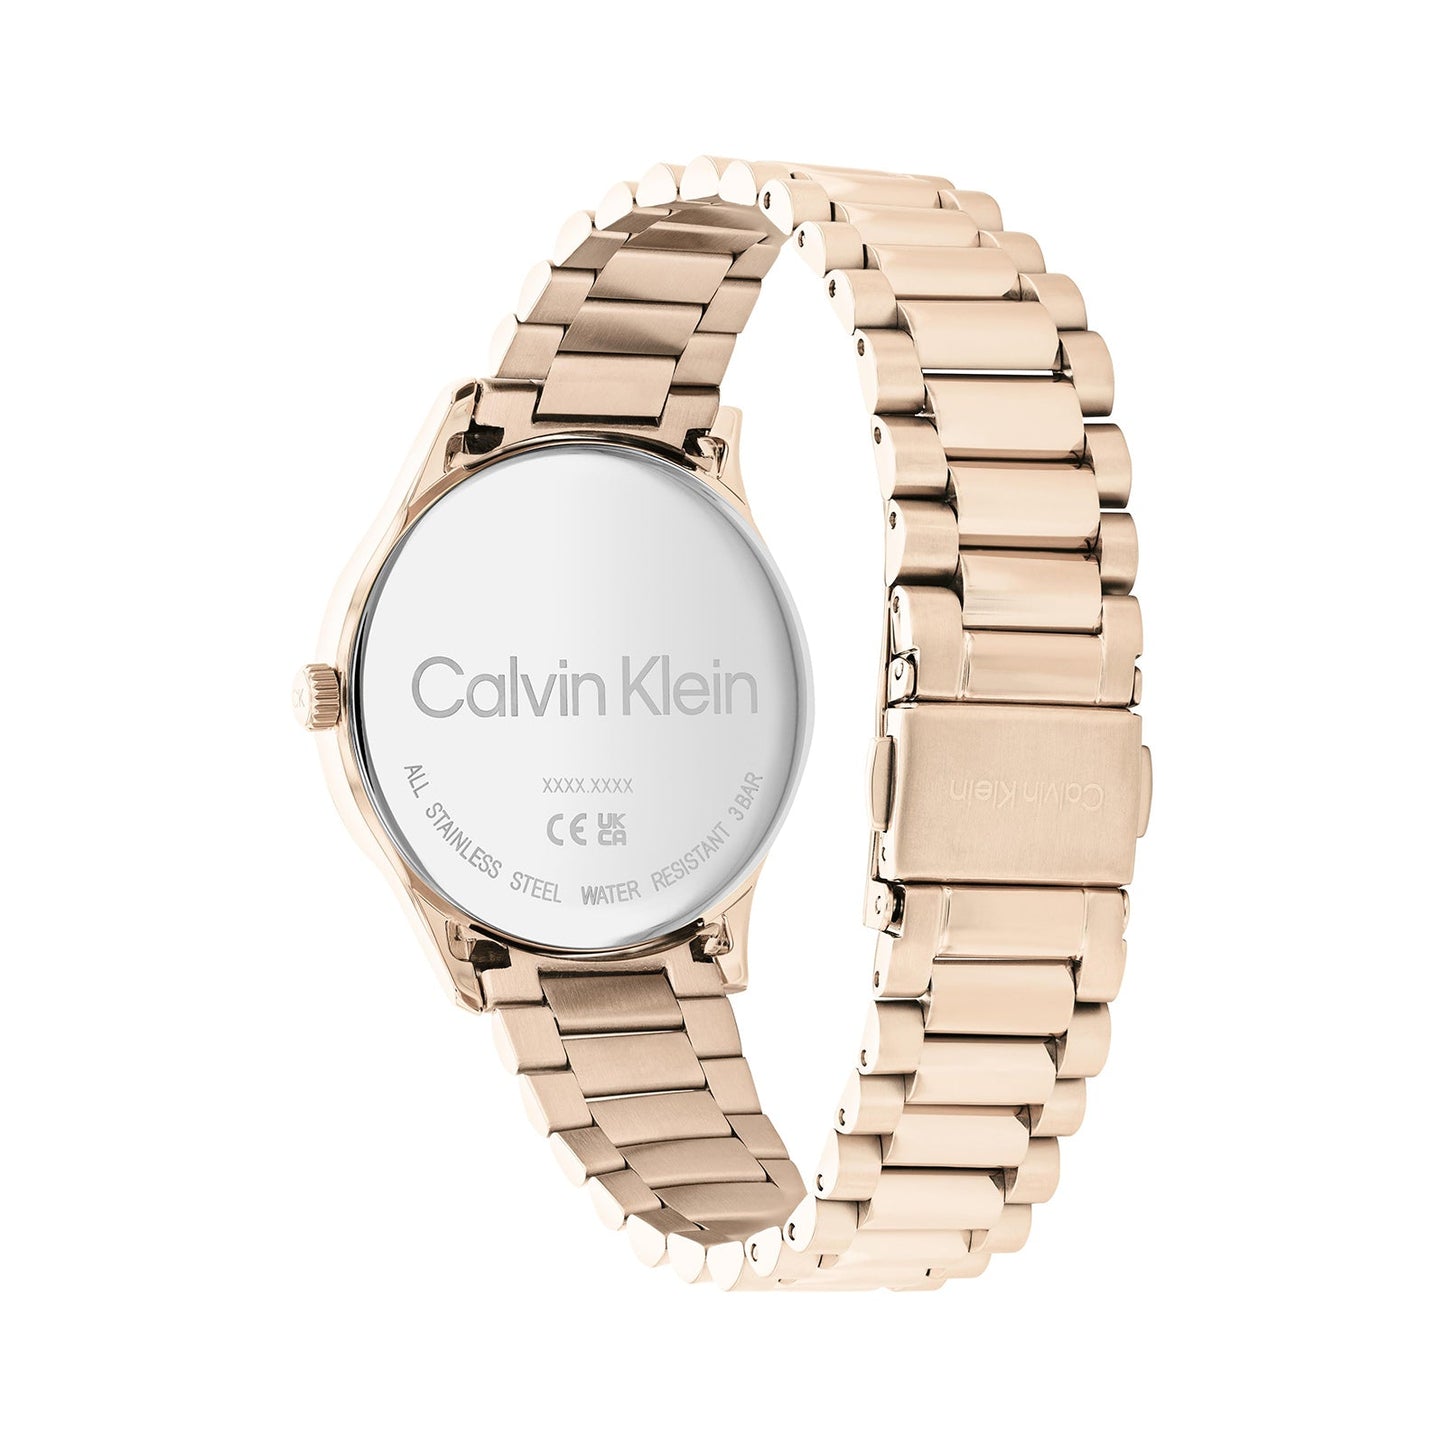 Calvin Klein 25200042 Women's Steel Watch